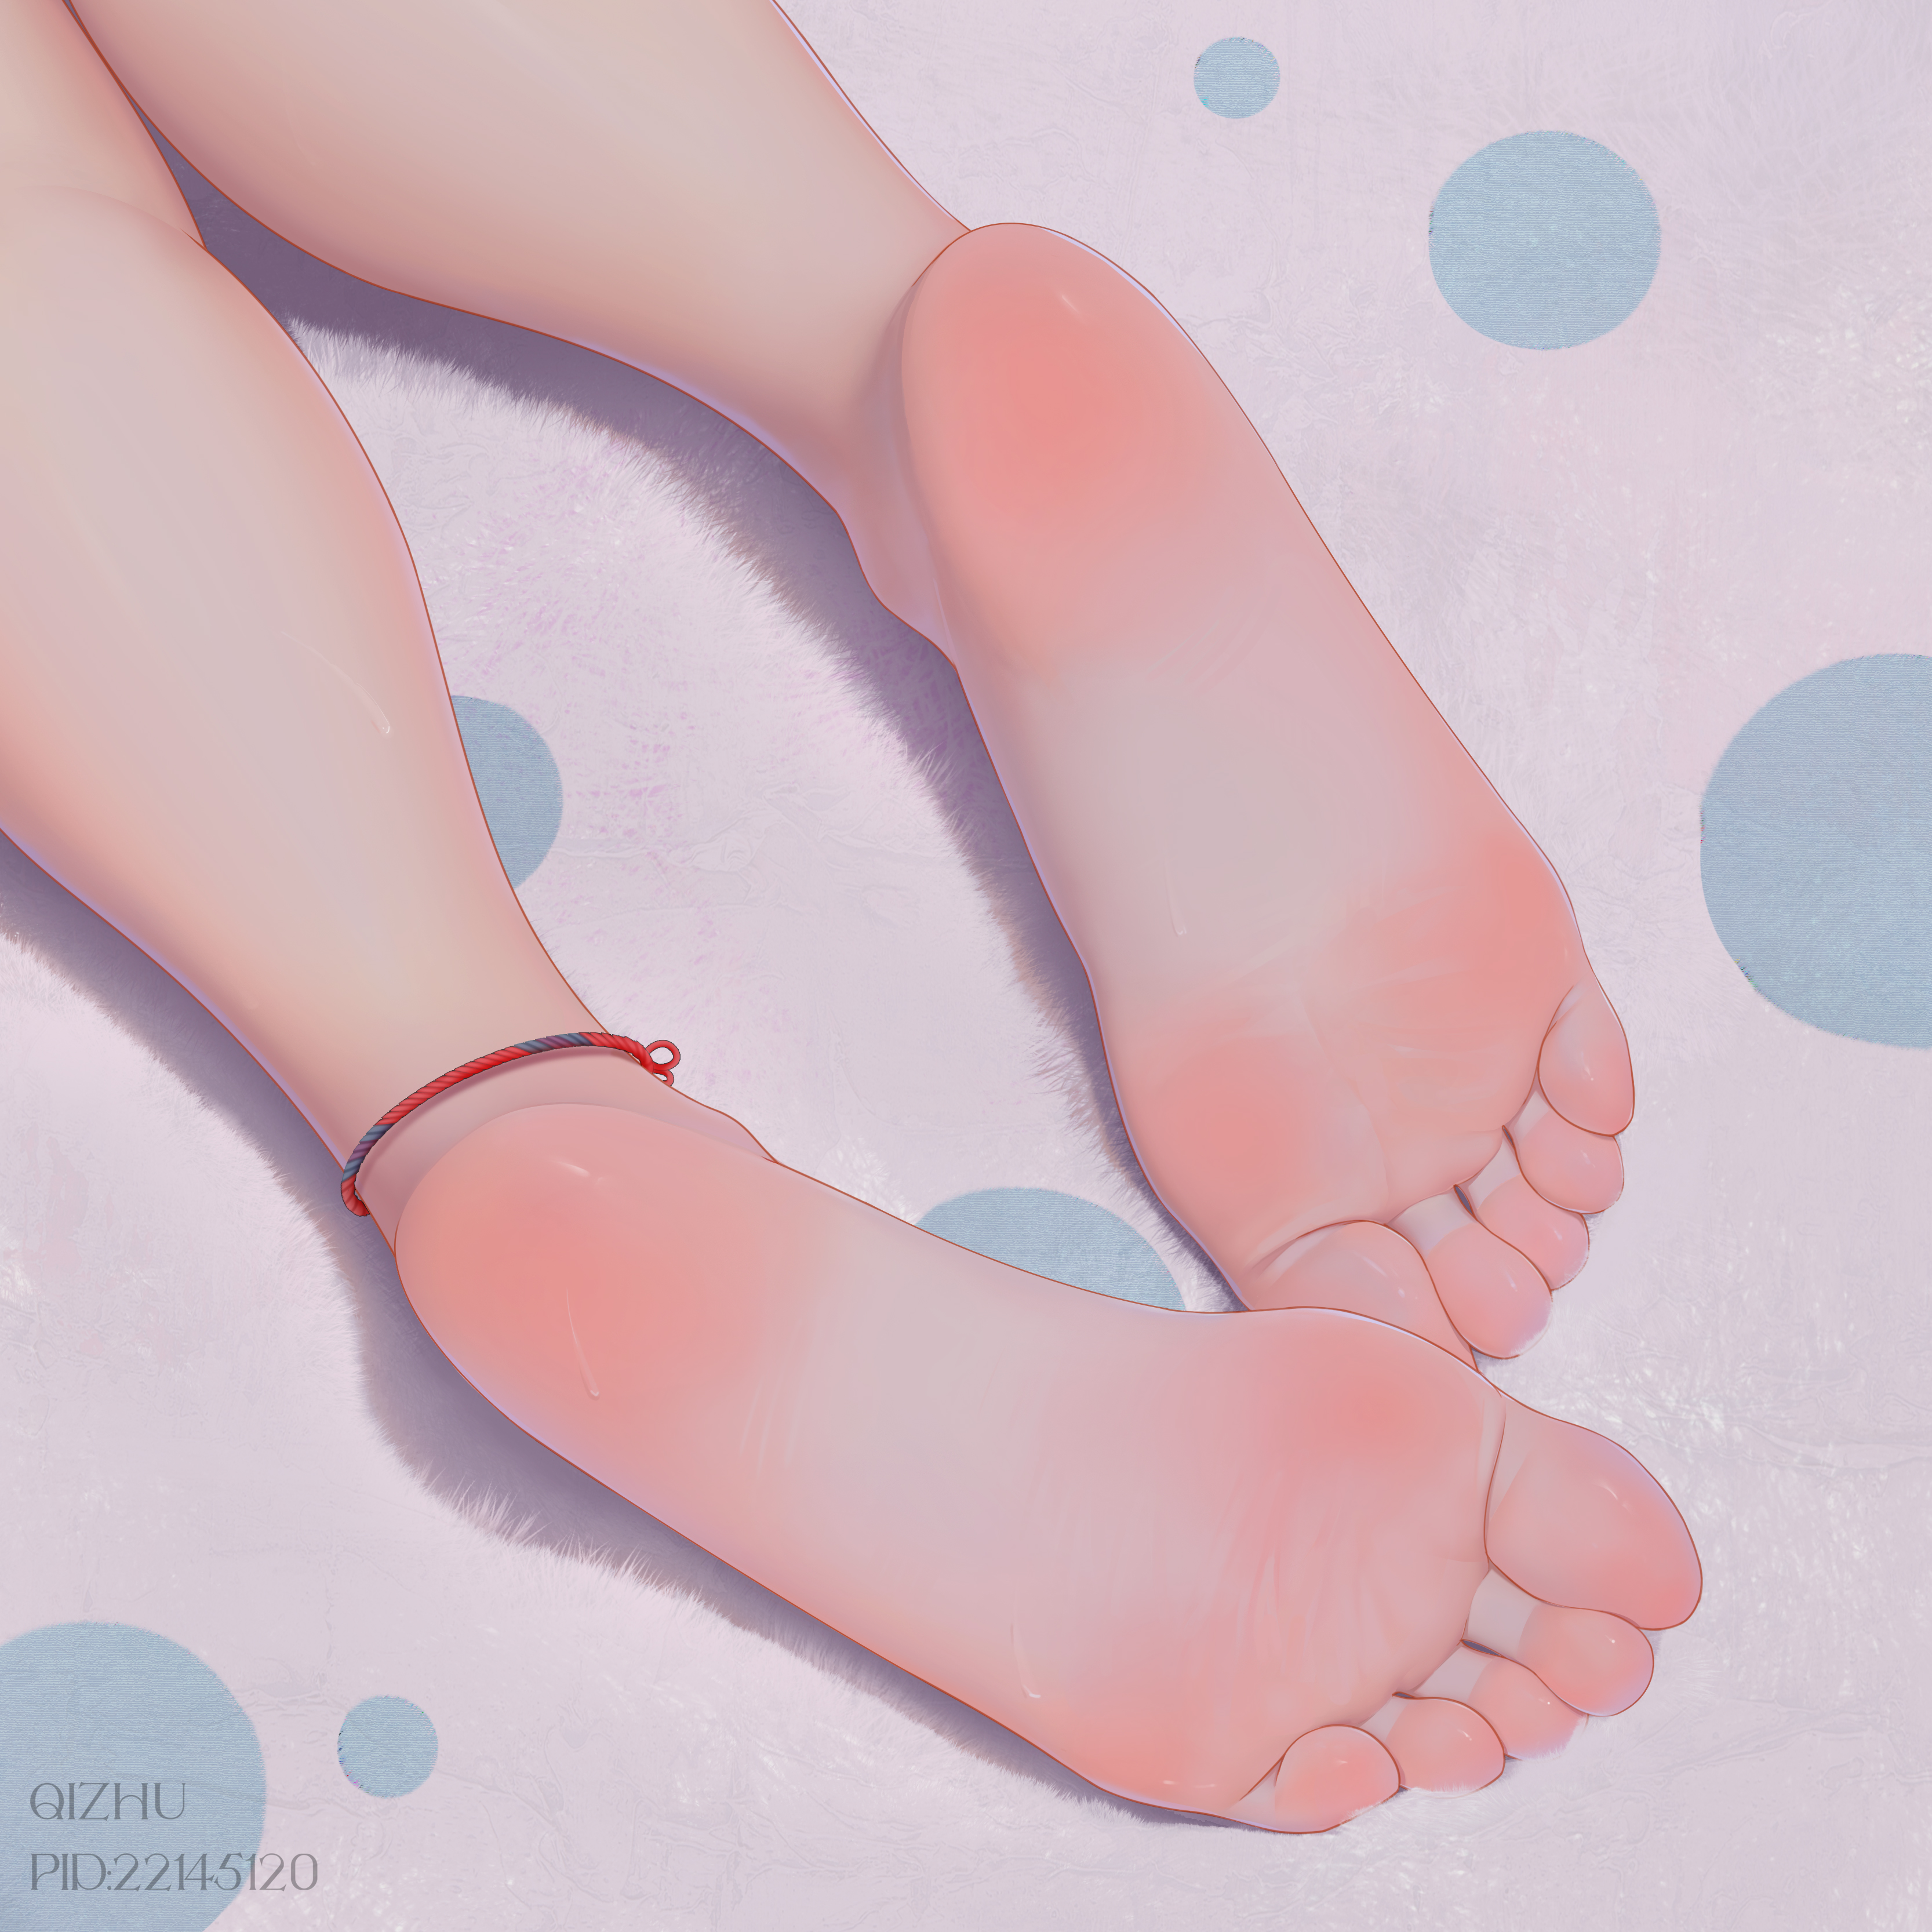 Anime 3333x3333 qizhu anime girls barefoot foot fetishism feet foot sole